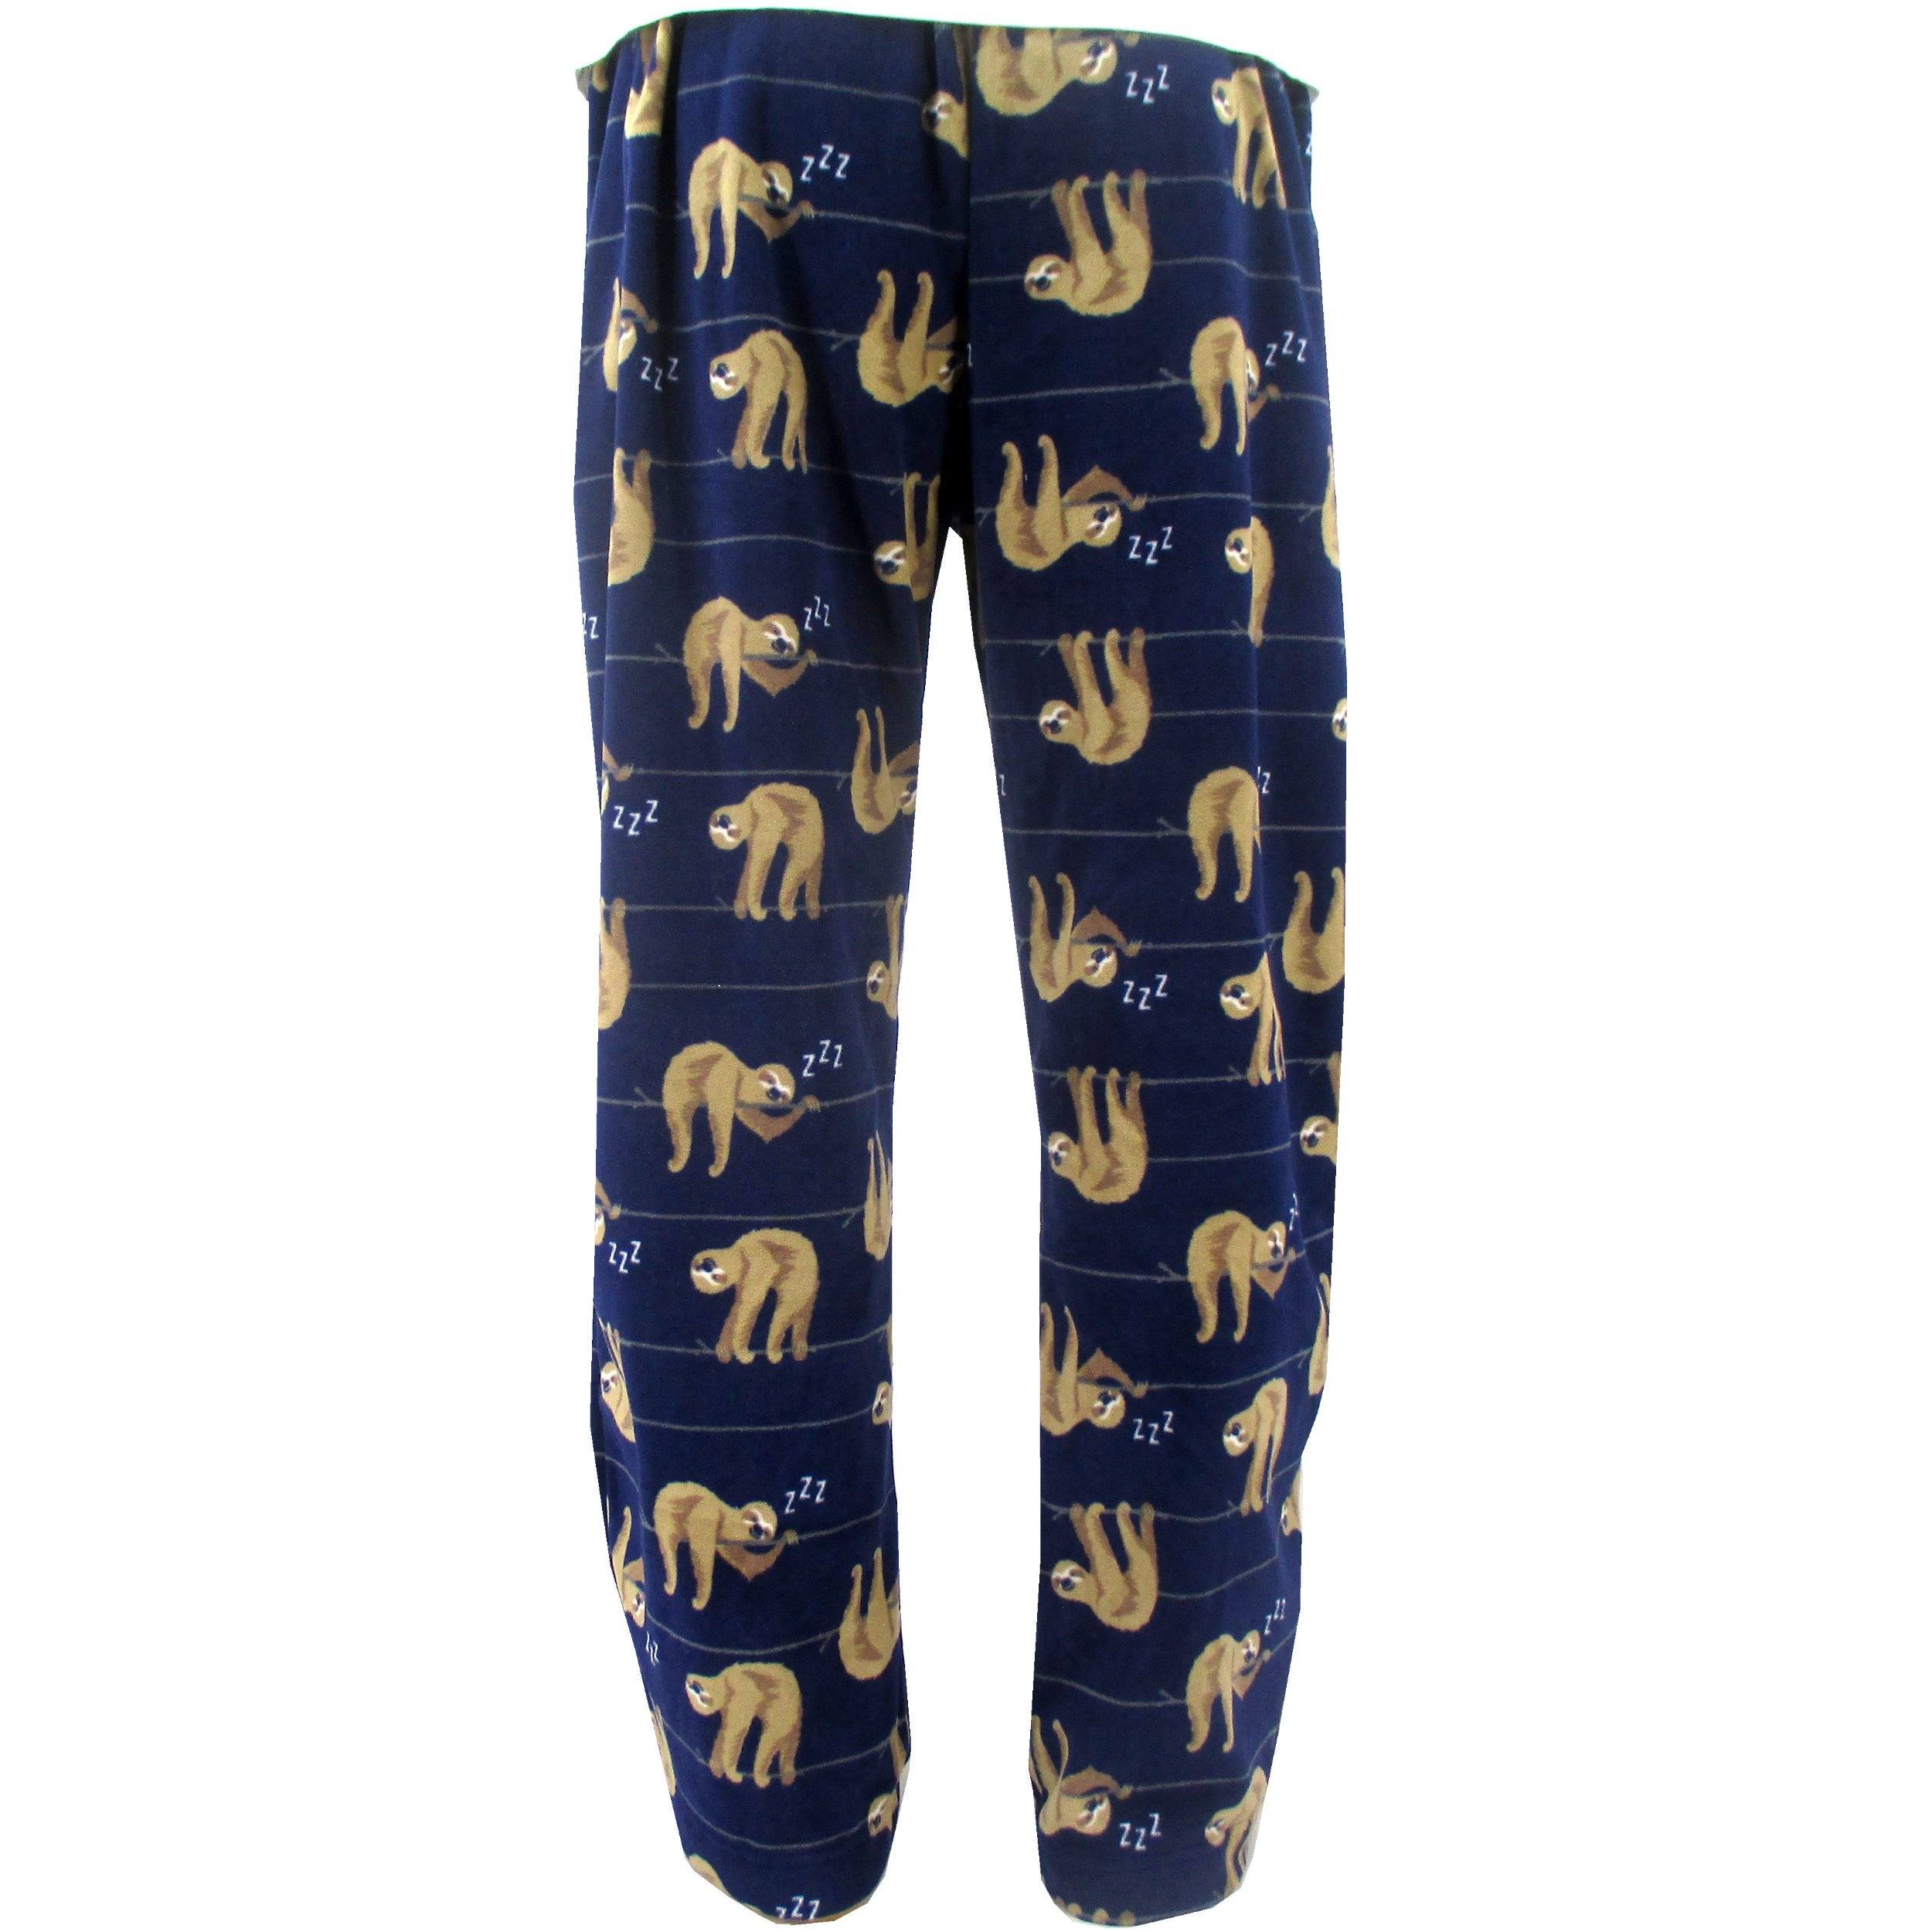 Polar Fleece Pajama Pants Set for Men Sleepwear PJs